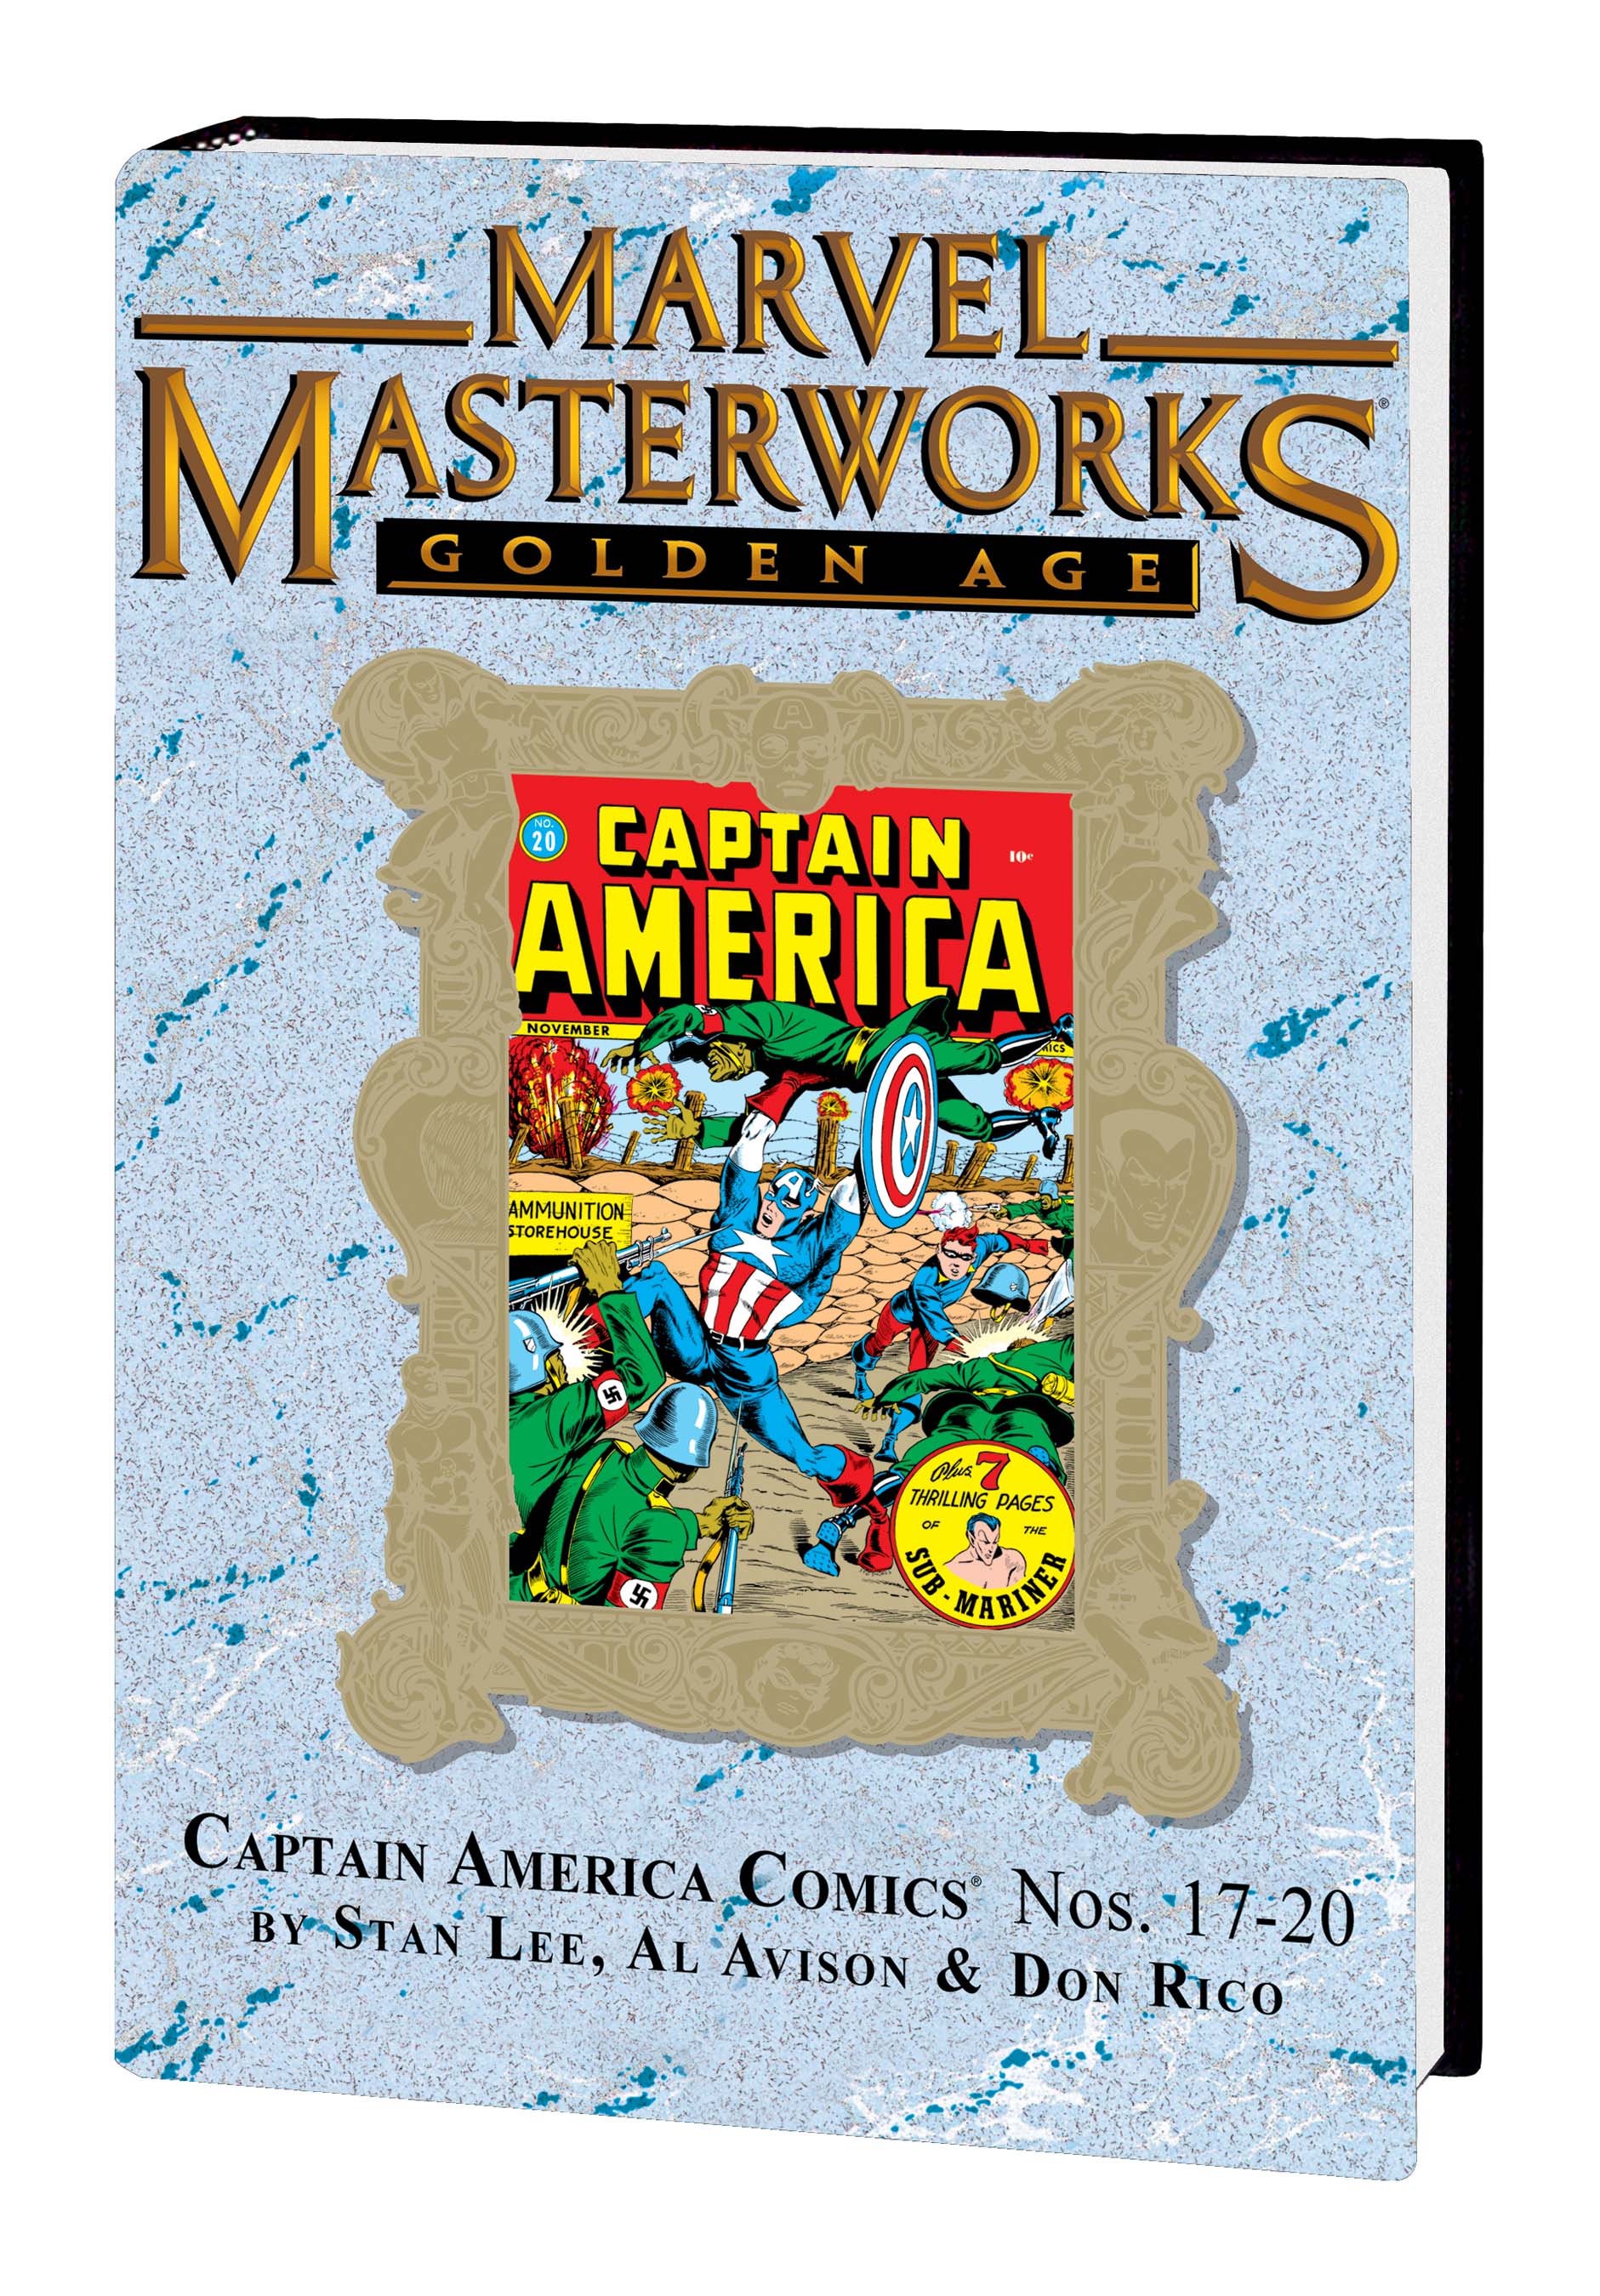 Marvel Masterworks: Golden Age Captain America Vol. 5 (Variant) (Hardcover)